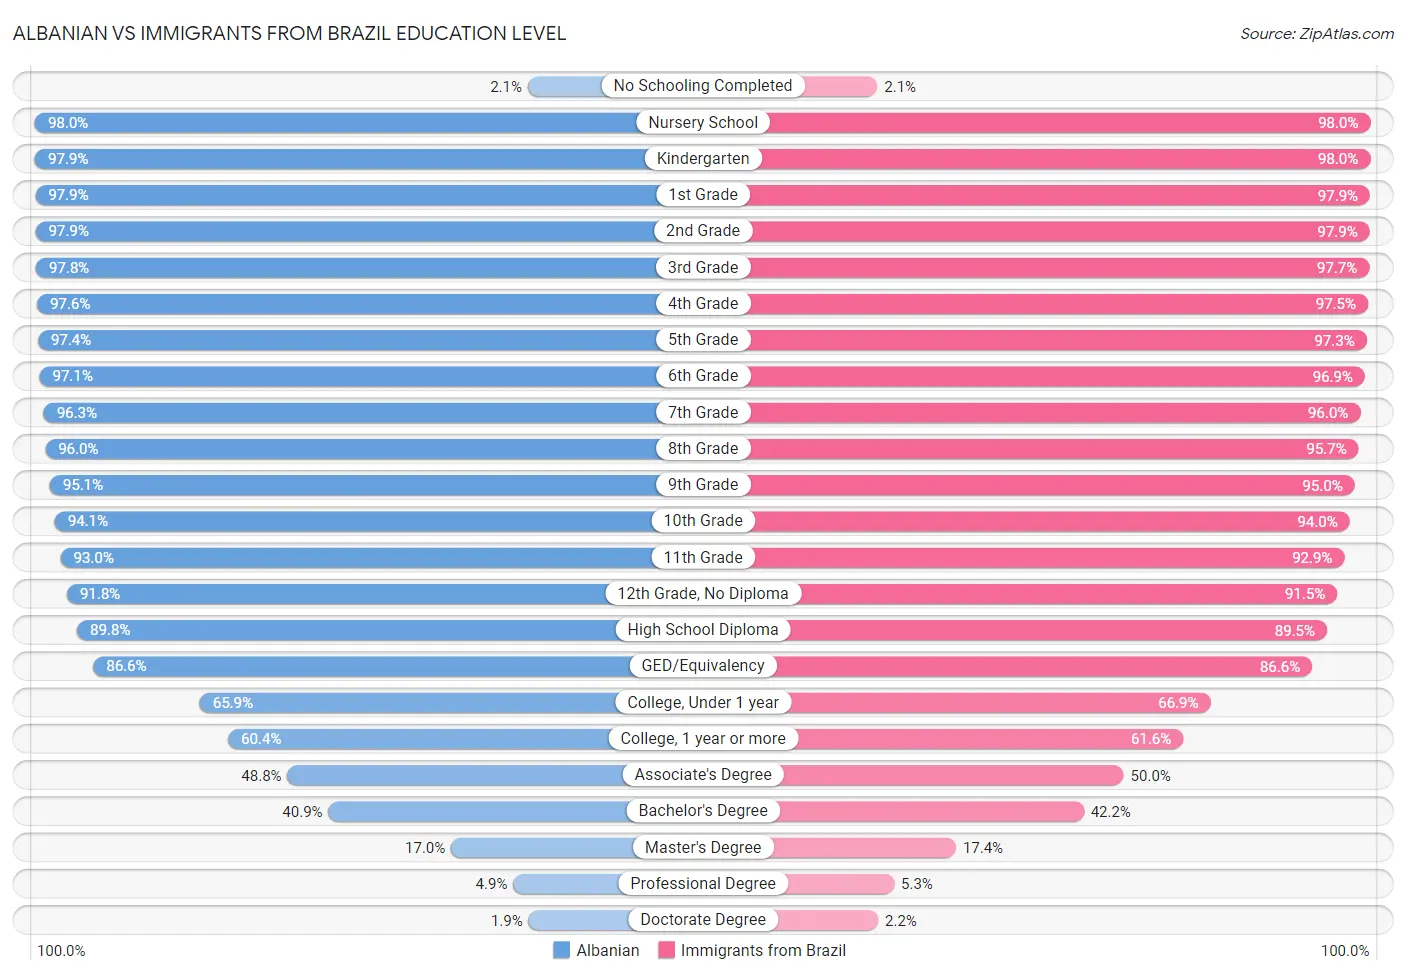 Albanian vs Immigrants from Brazil Education Level